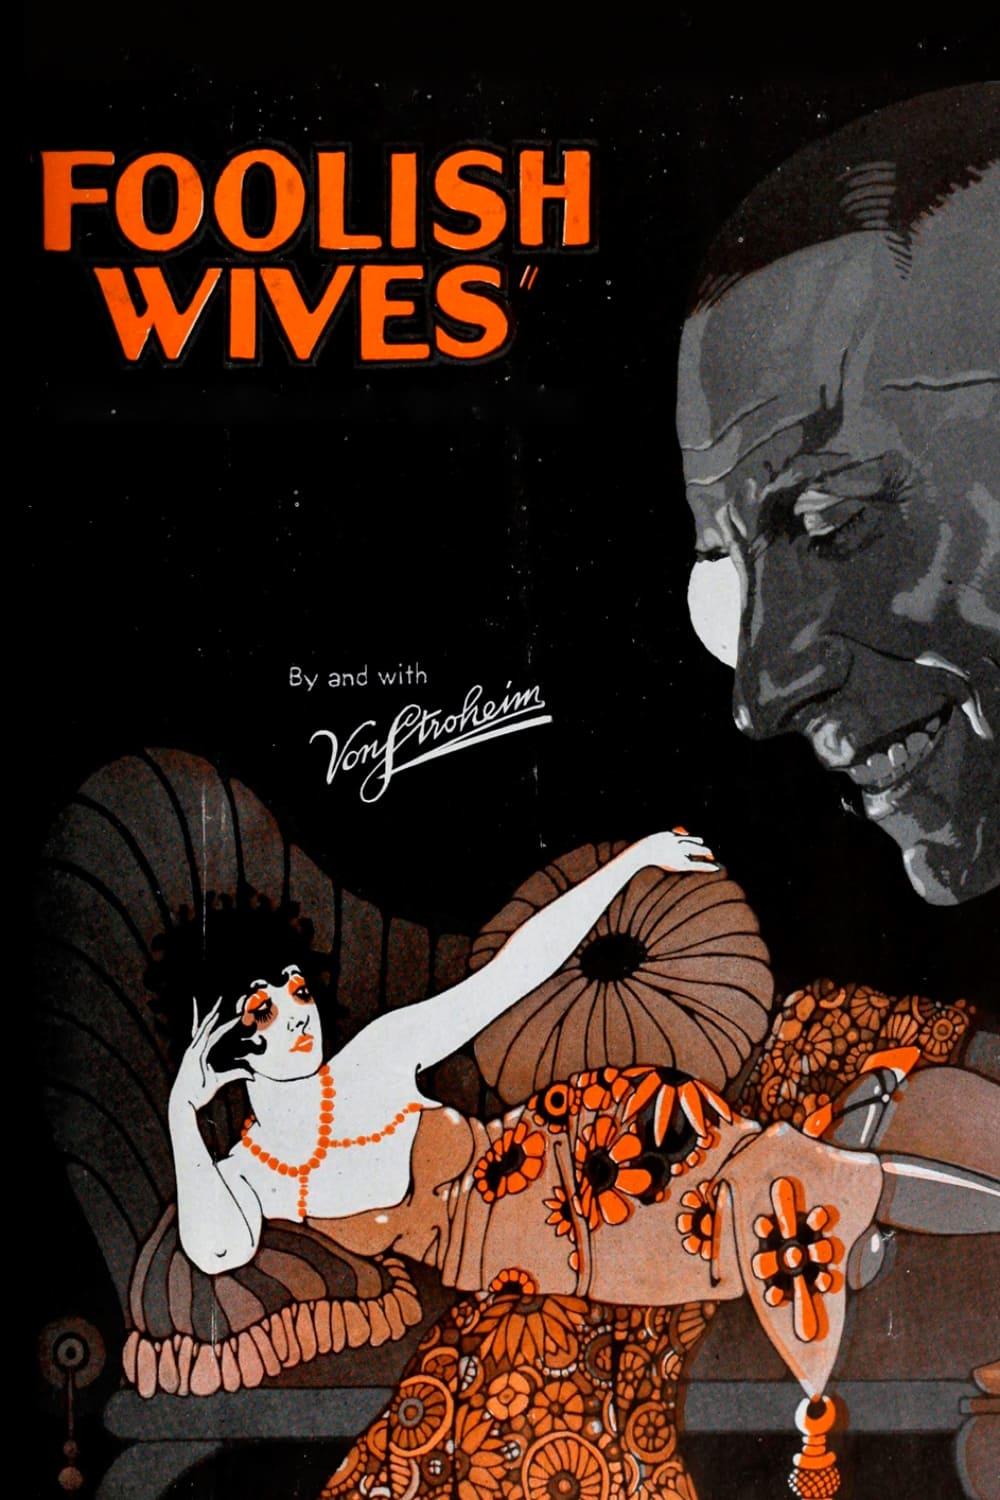 Foolish Wives poster